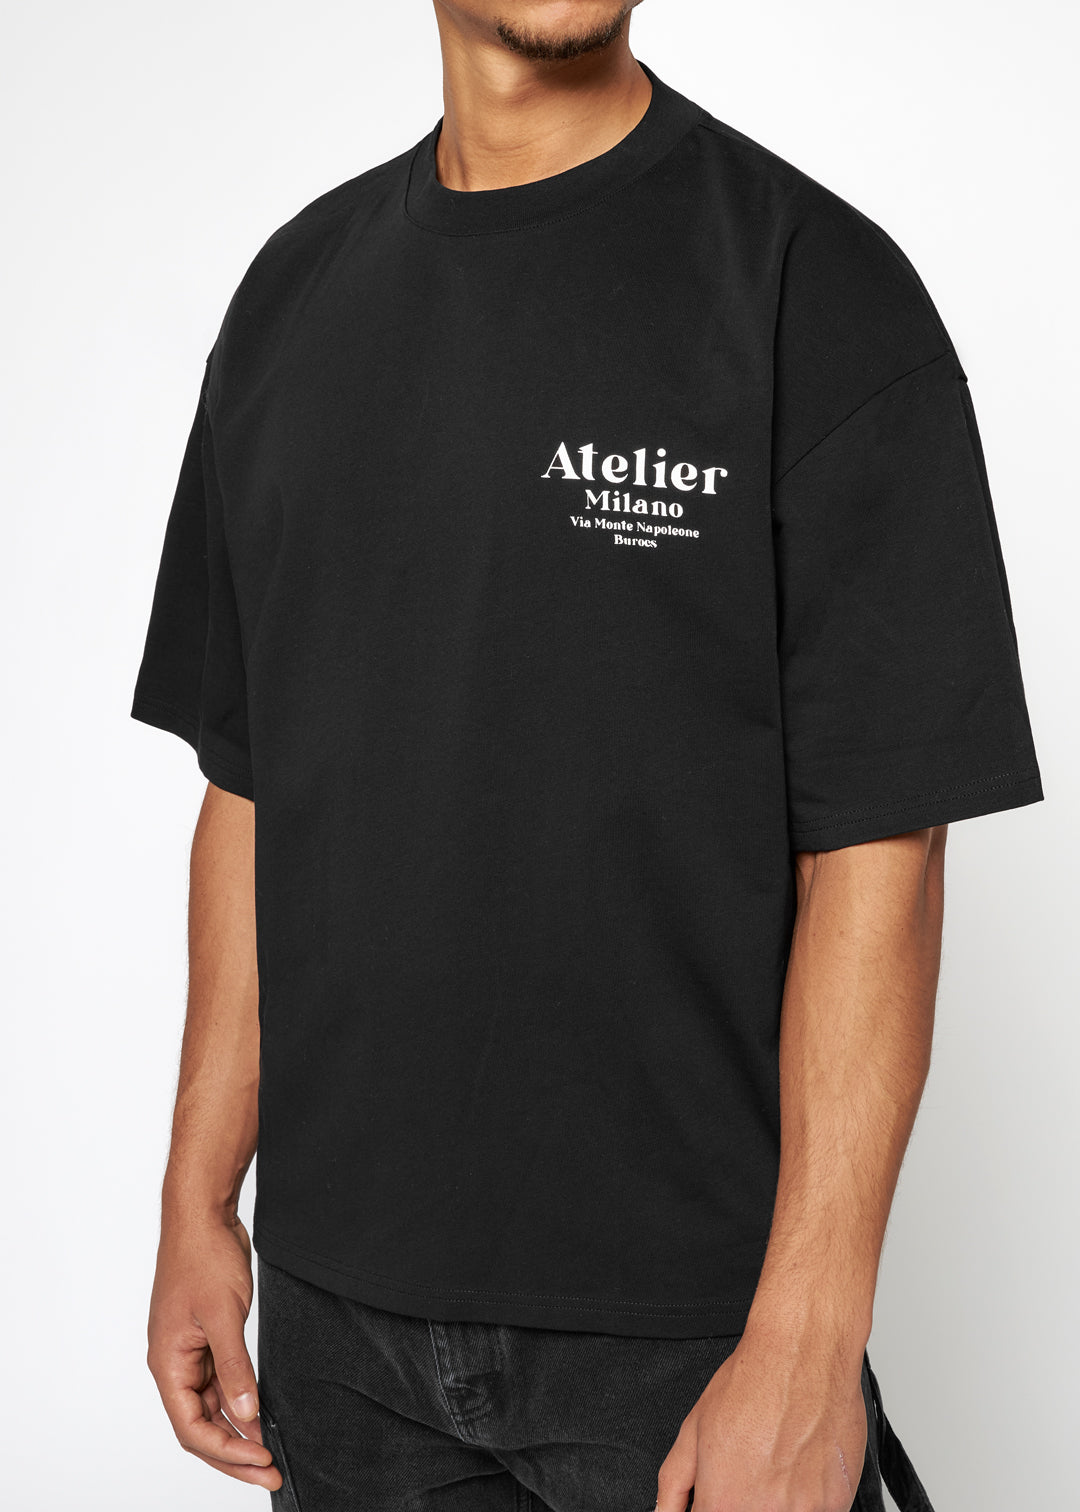 Atelier T-Shirt